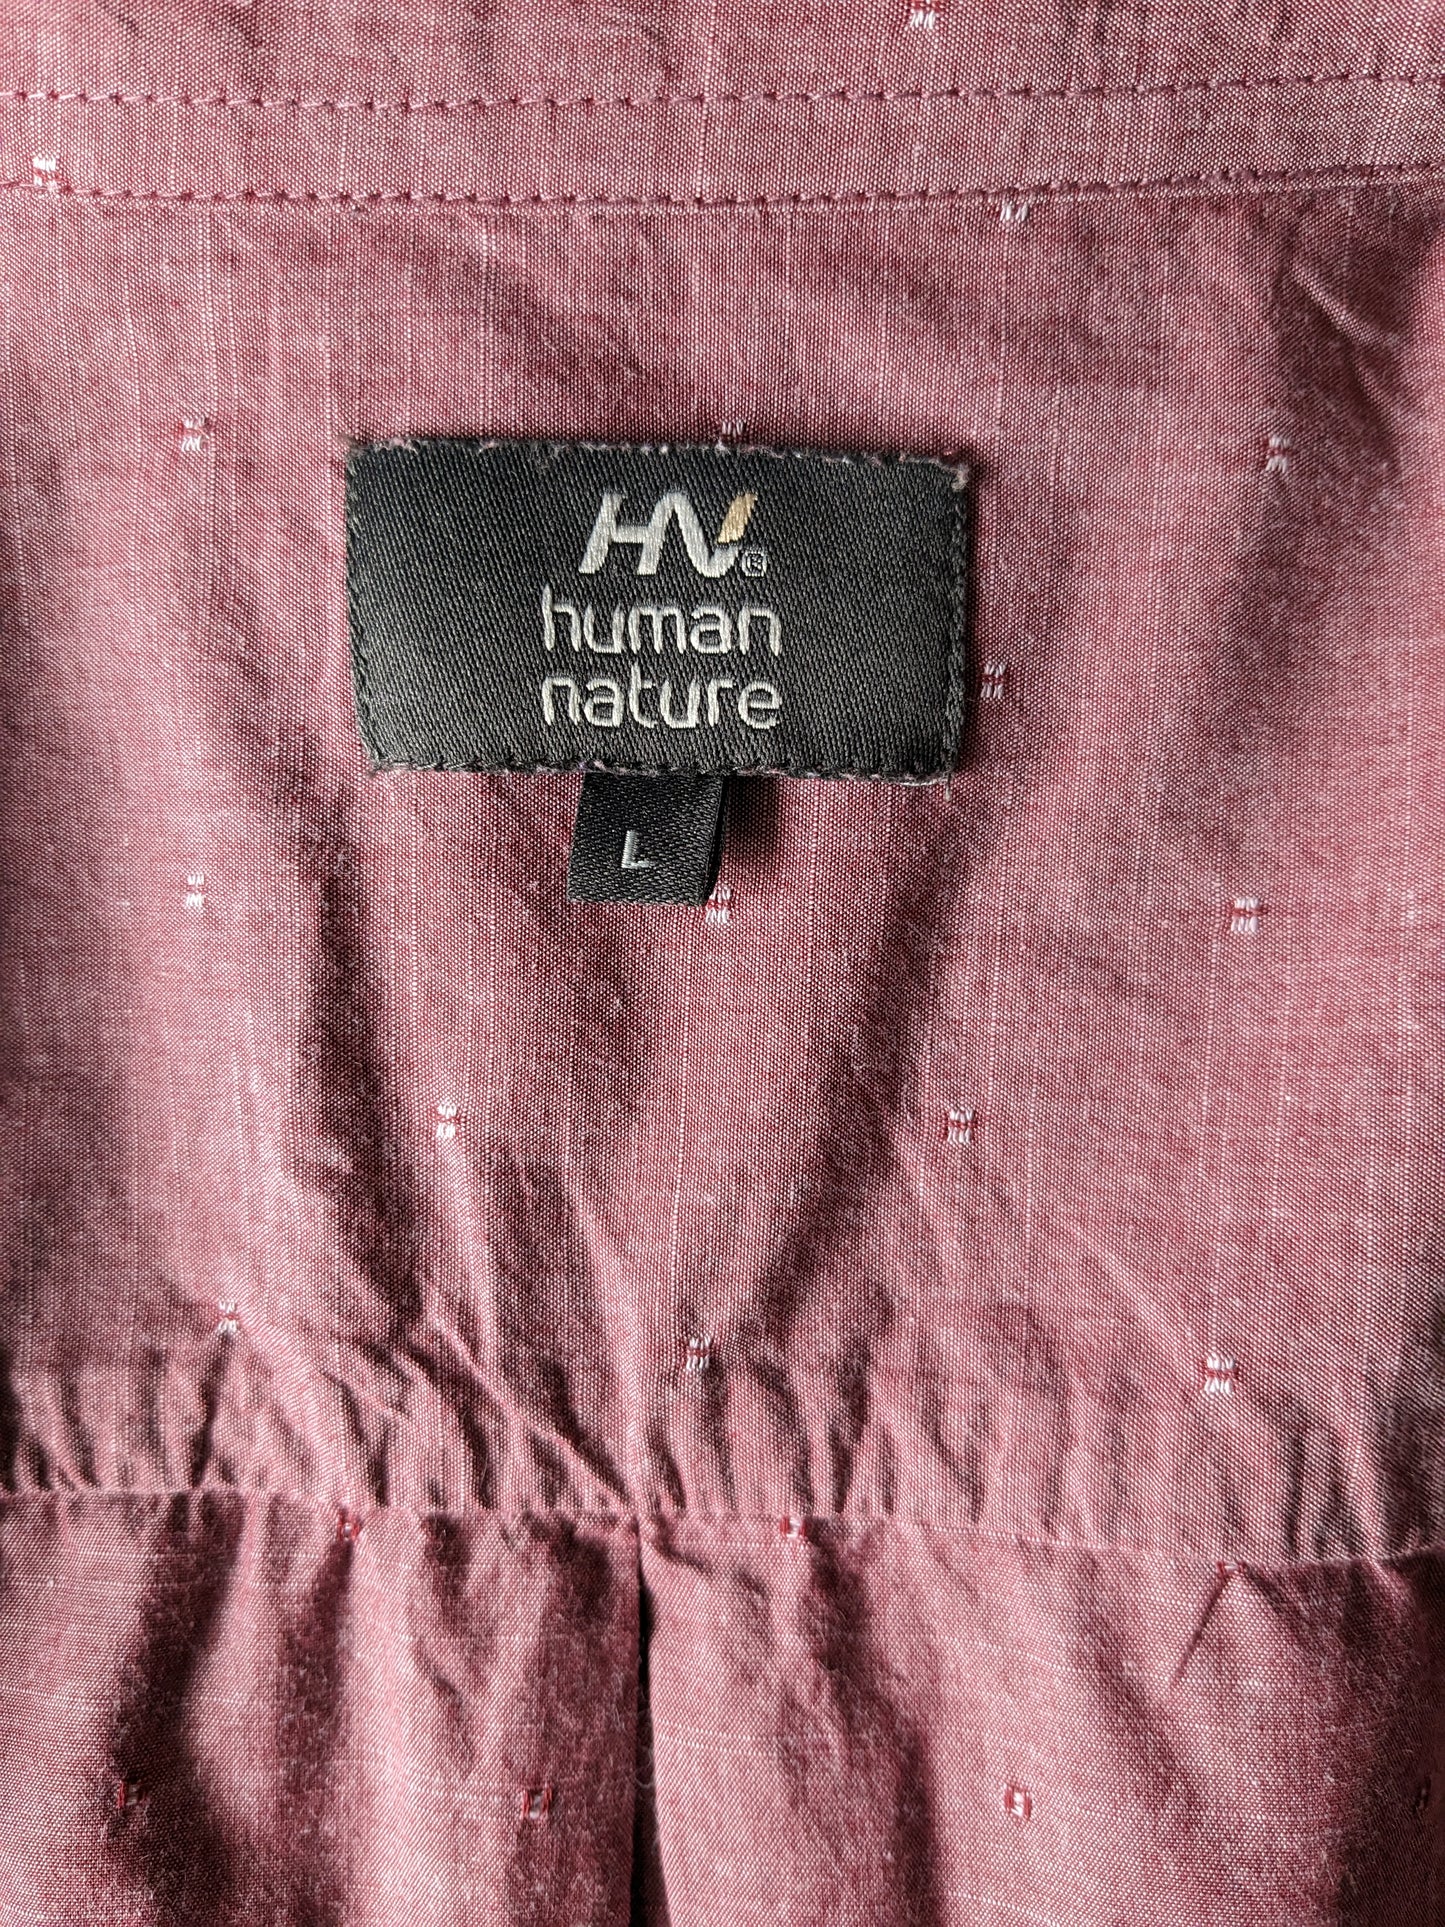 Human Nature shirt. Red mixed motif. Size L.